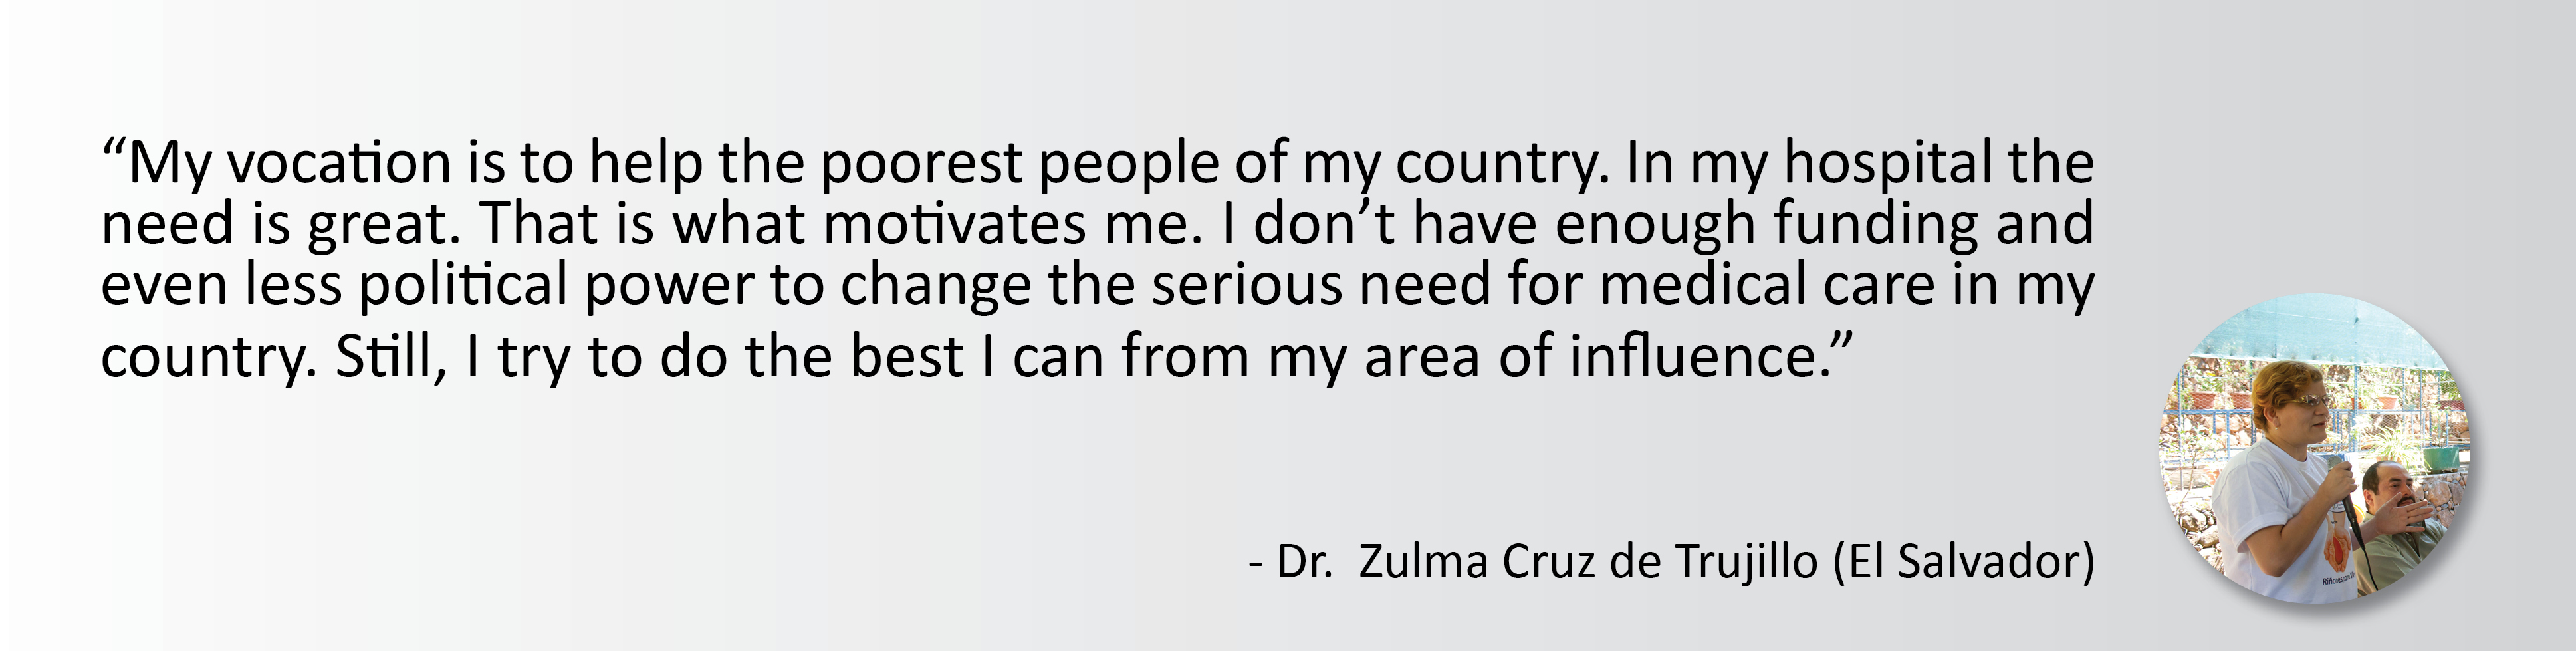 Zulma Cruz de Trujillo